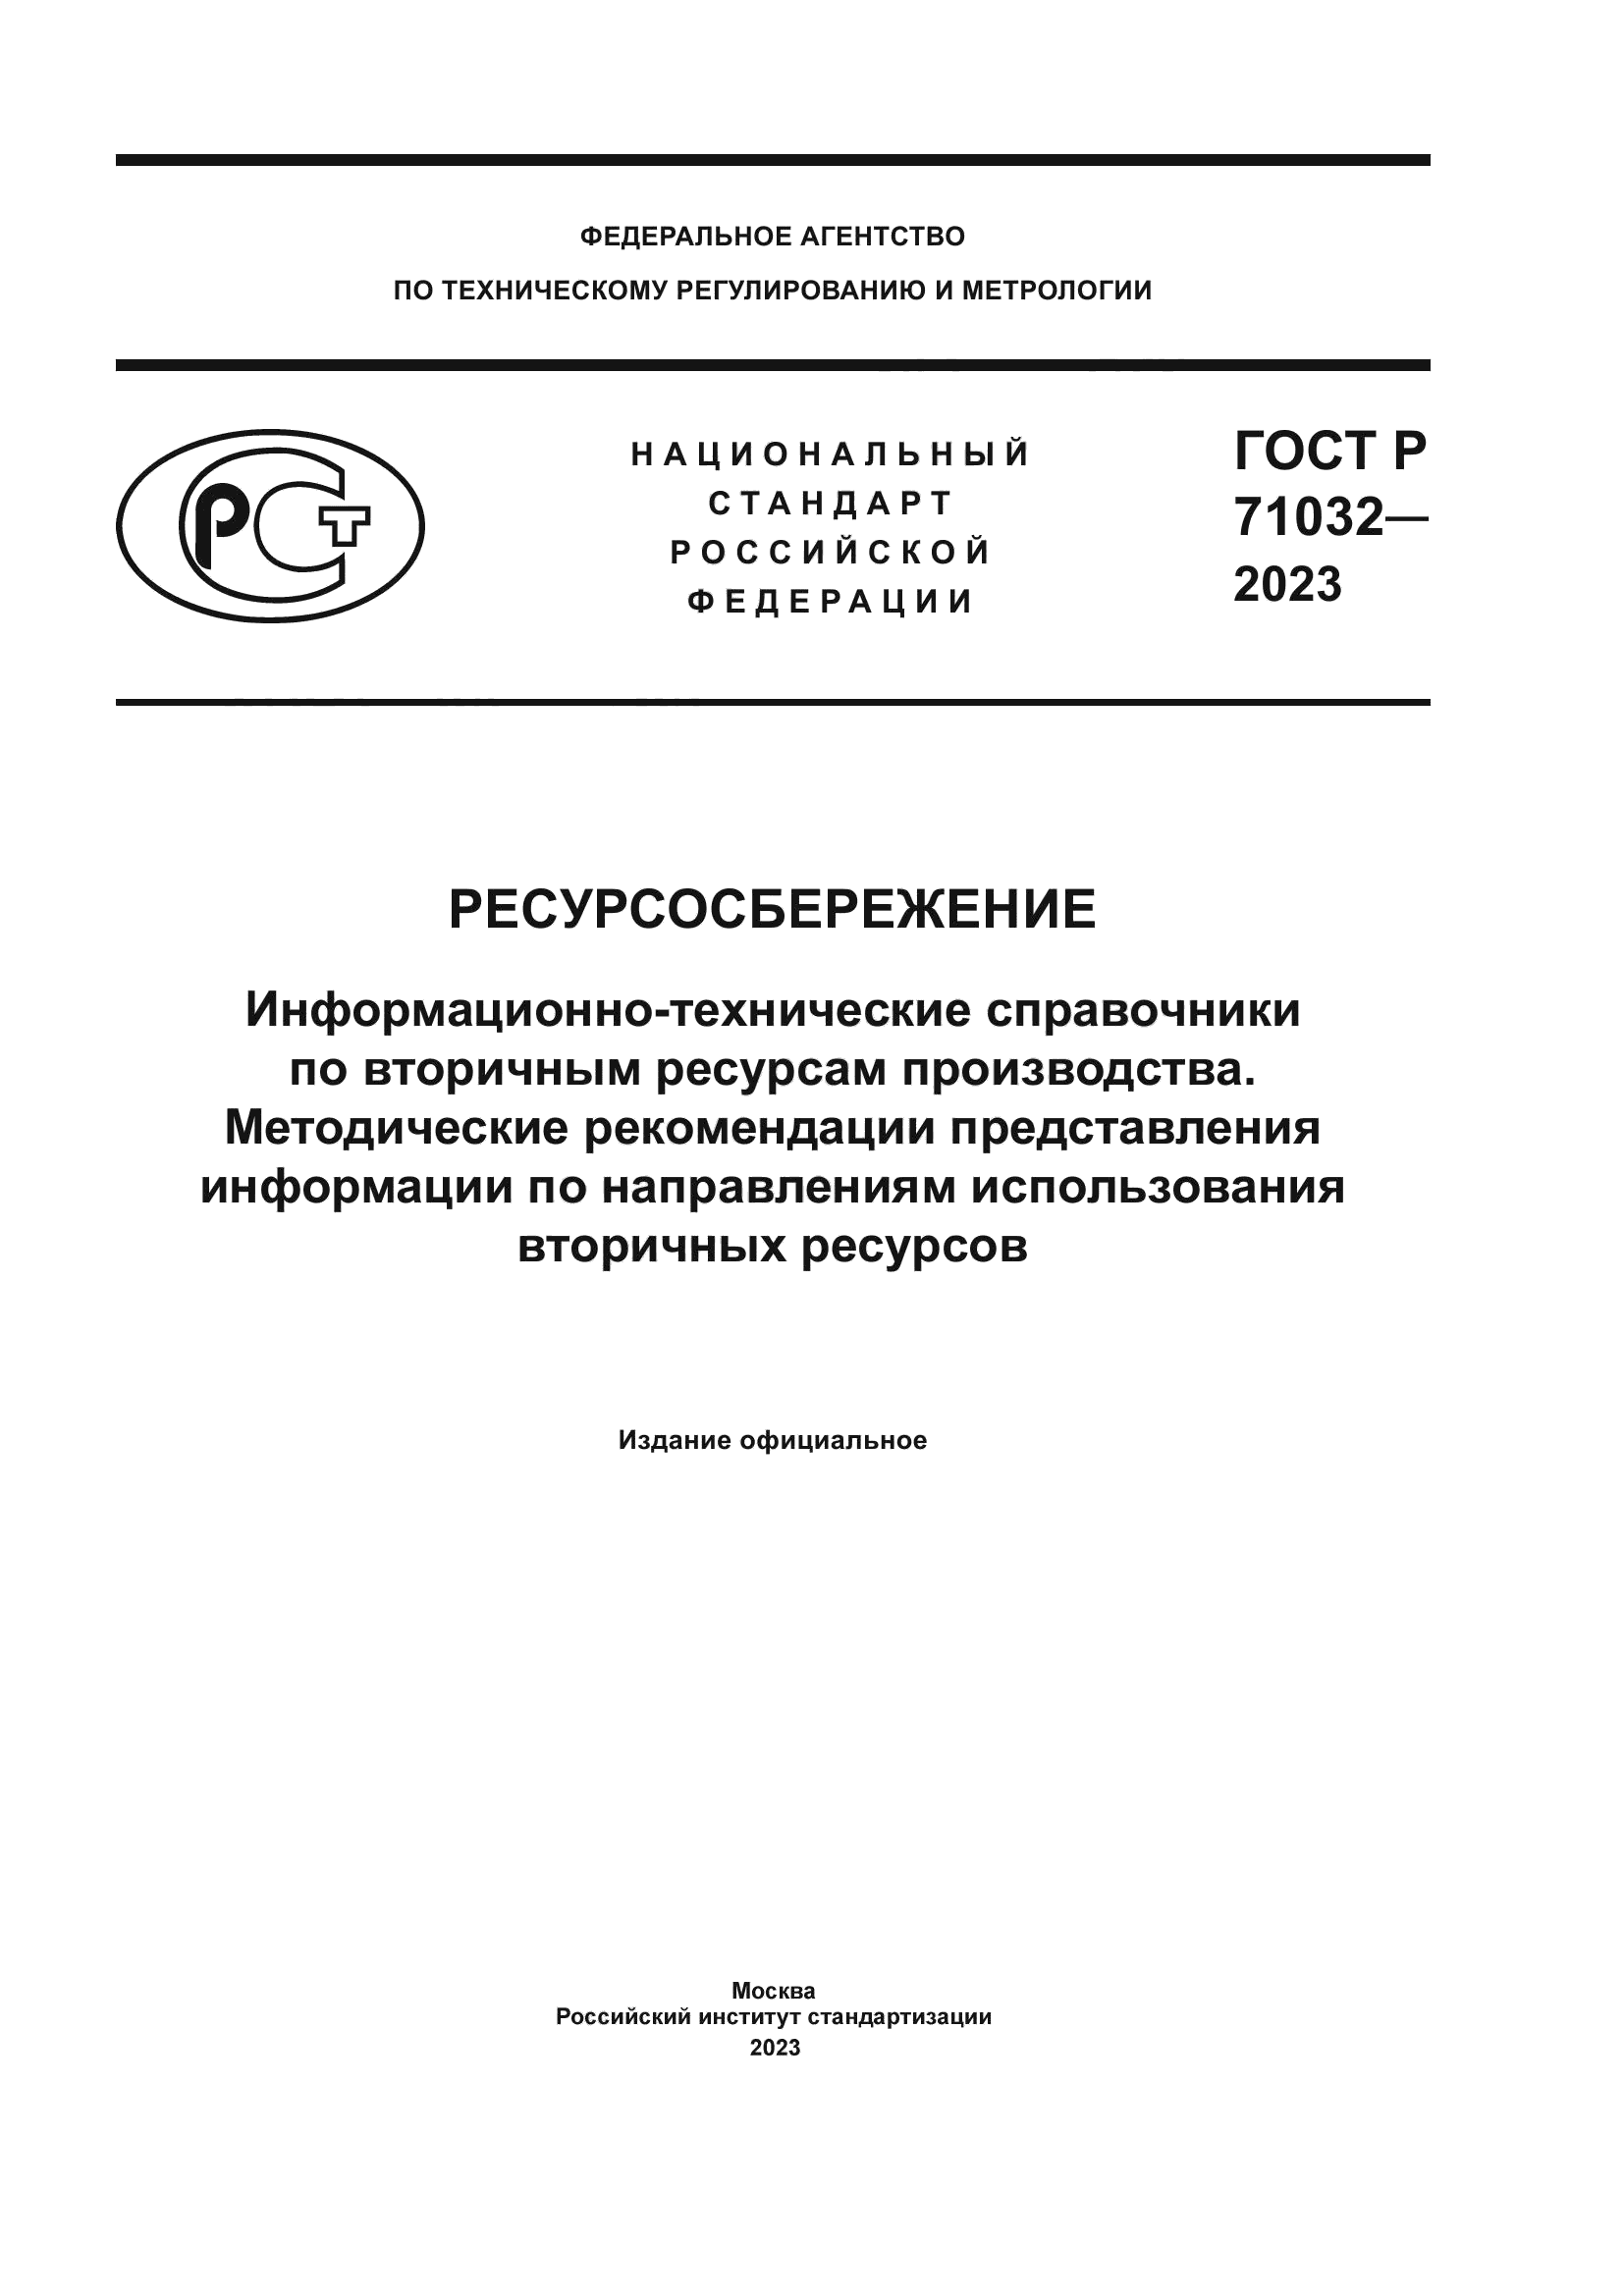 ГОСТ Р 71032-2023